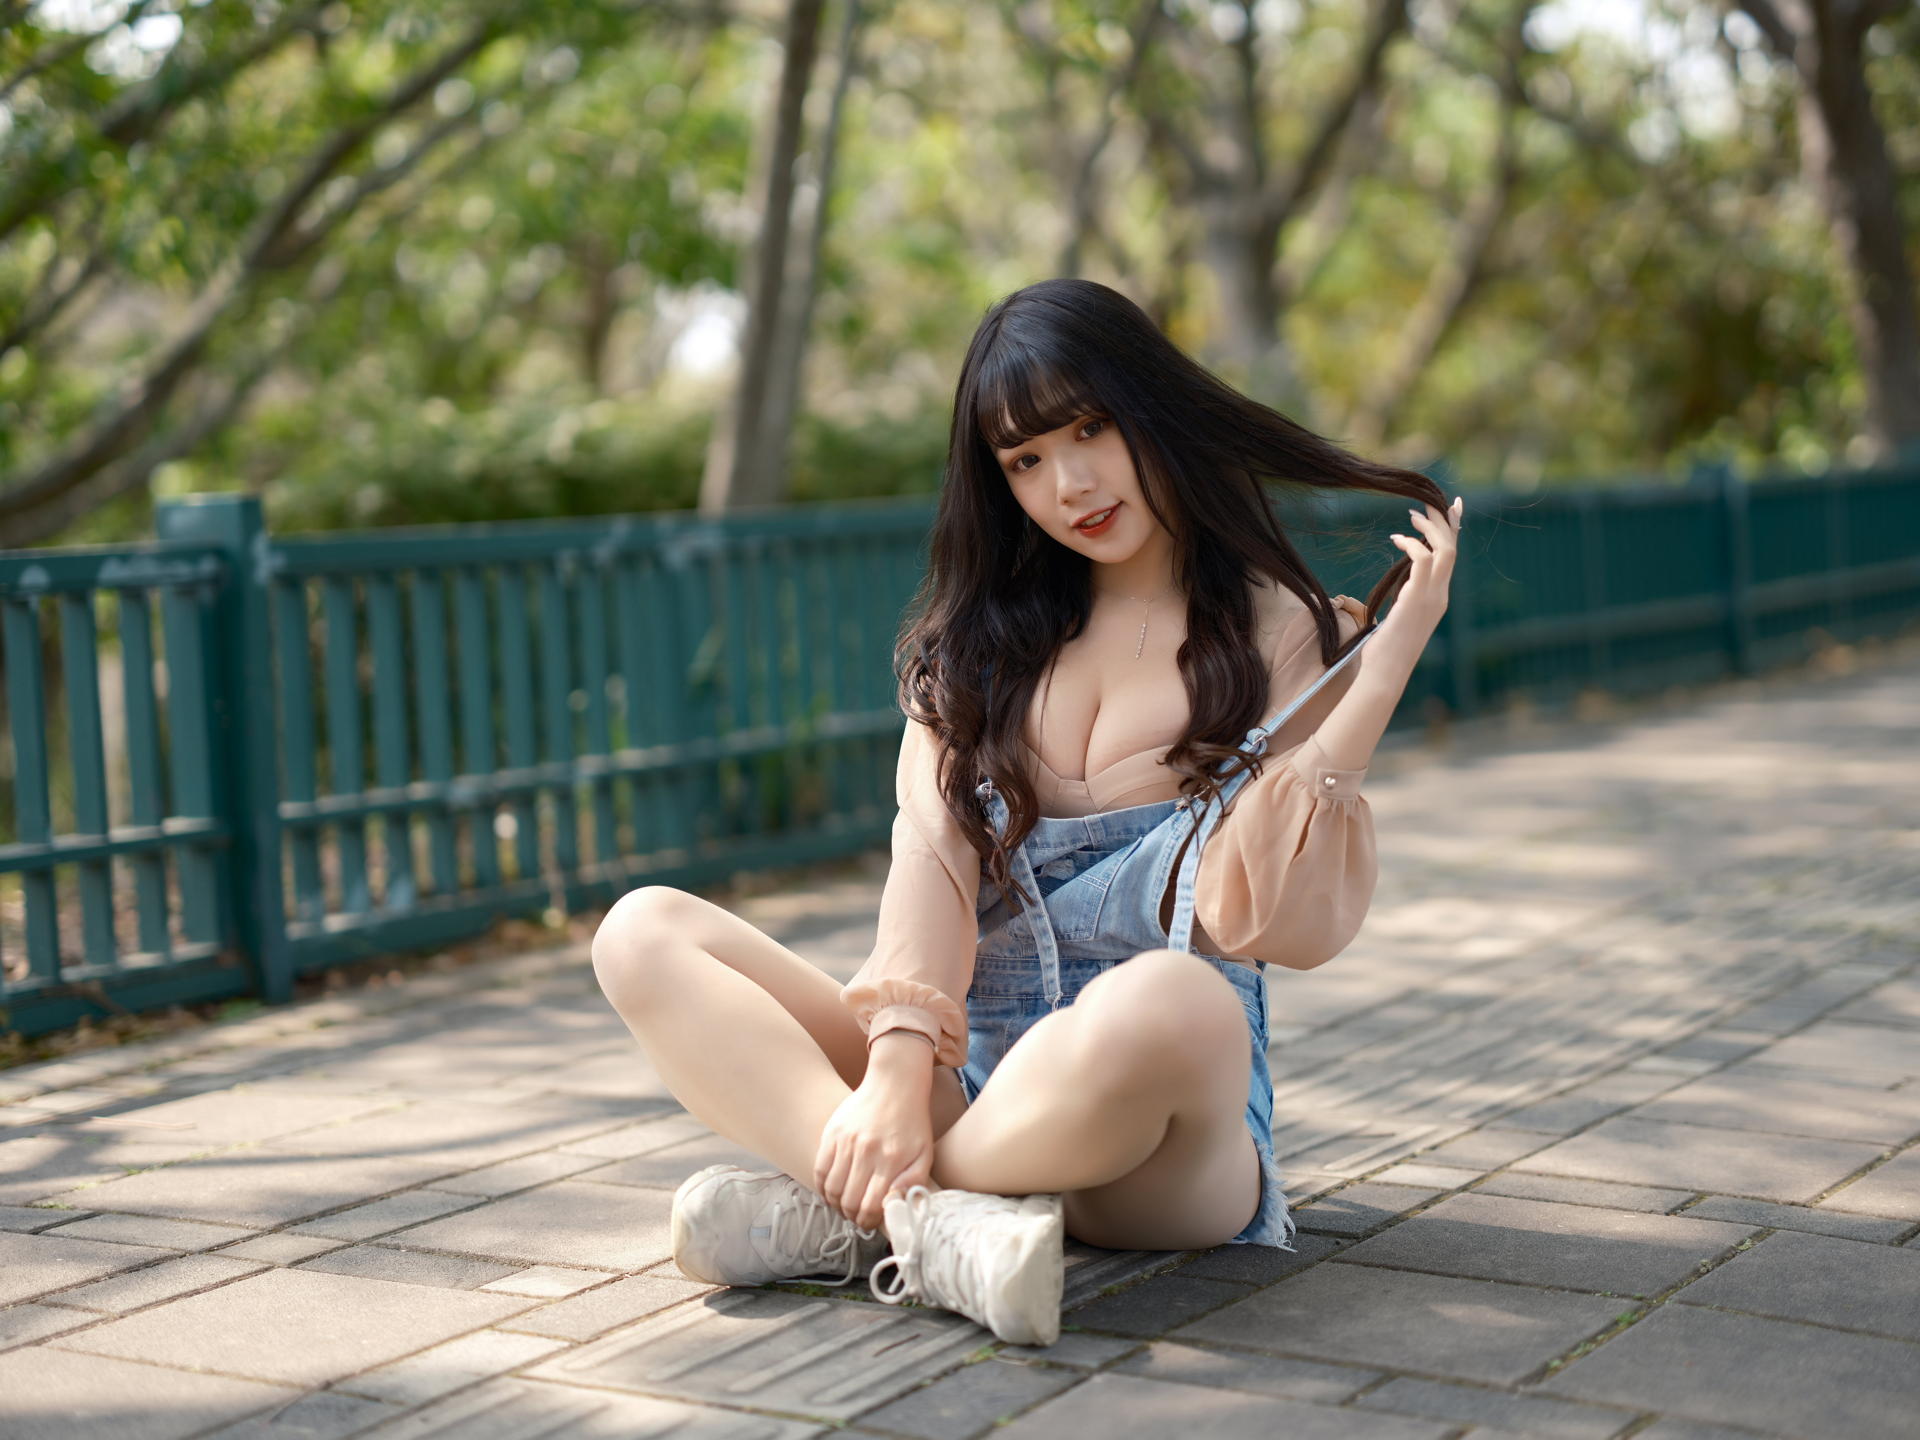 Asian Model Women Dark Hair Long Hair Depth Of Field Sitting Sneakers Fence Trees Blouse Jeans Dress 1920x1440